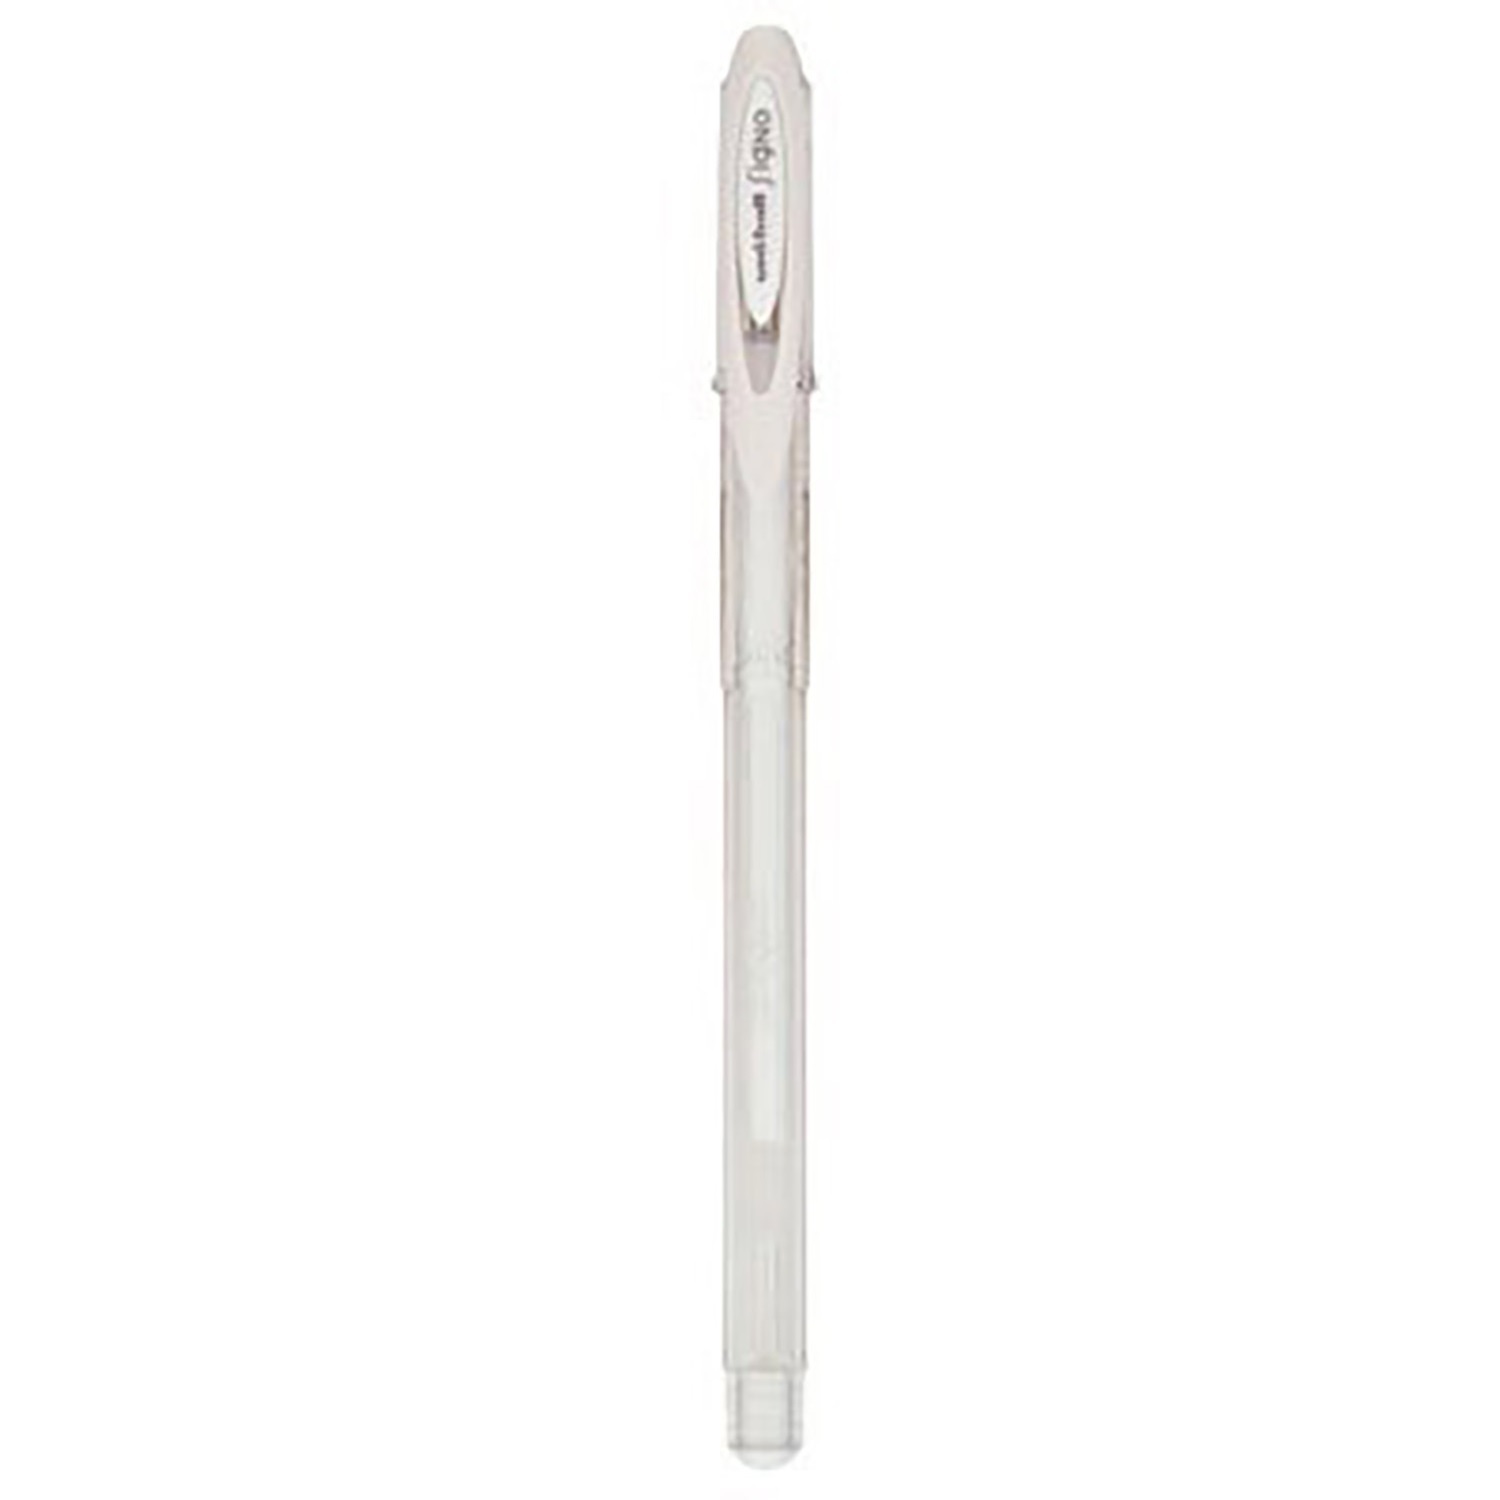 Uniball Signo UM120 Rollerball Pen - White Image 1